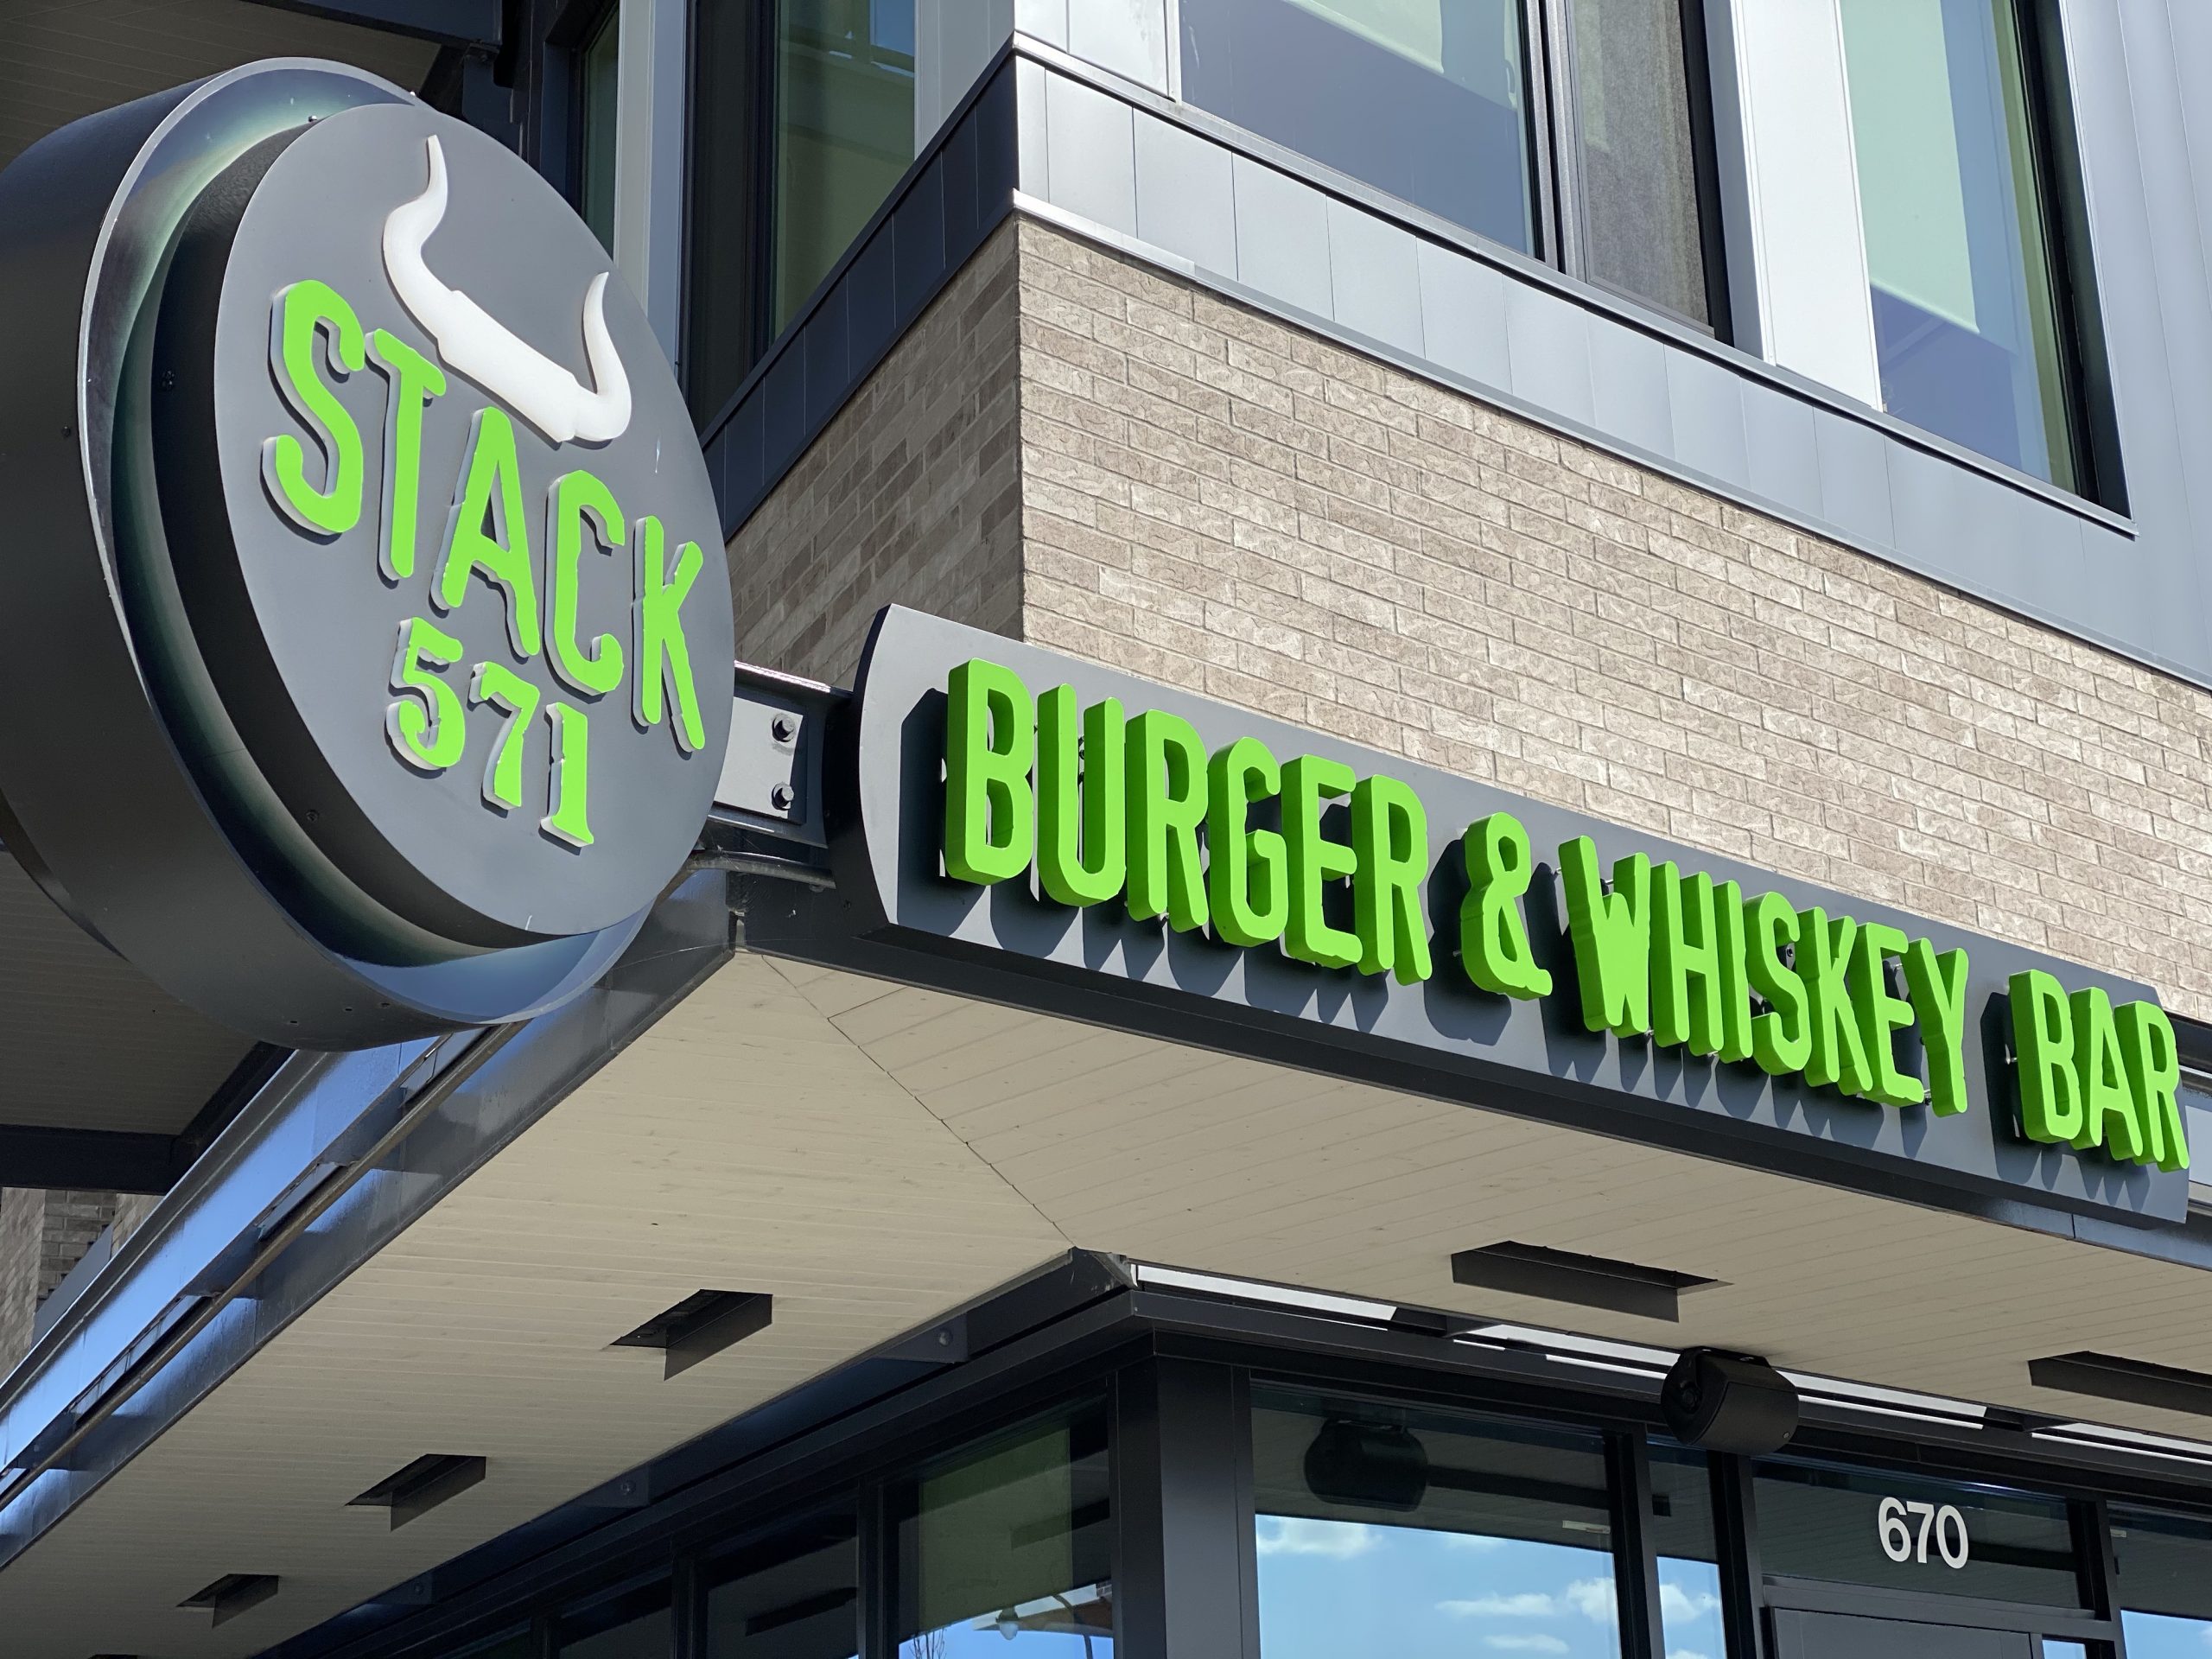 Front of Stack 571 Burger & Whiskey Bar